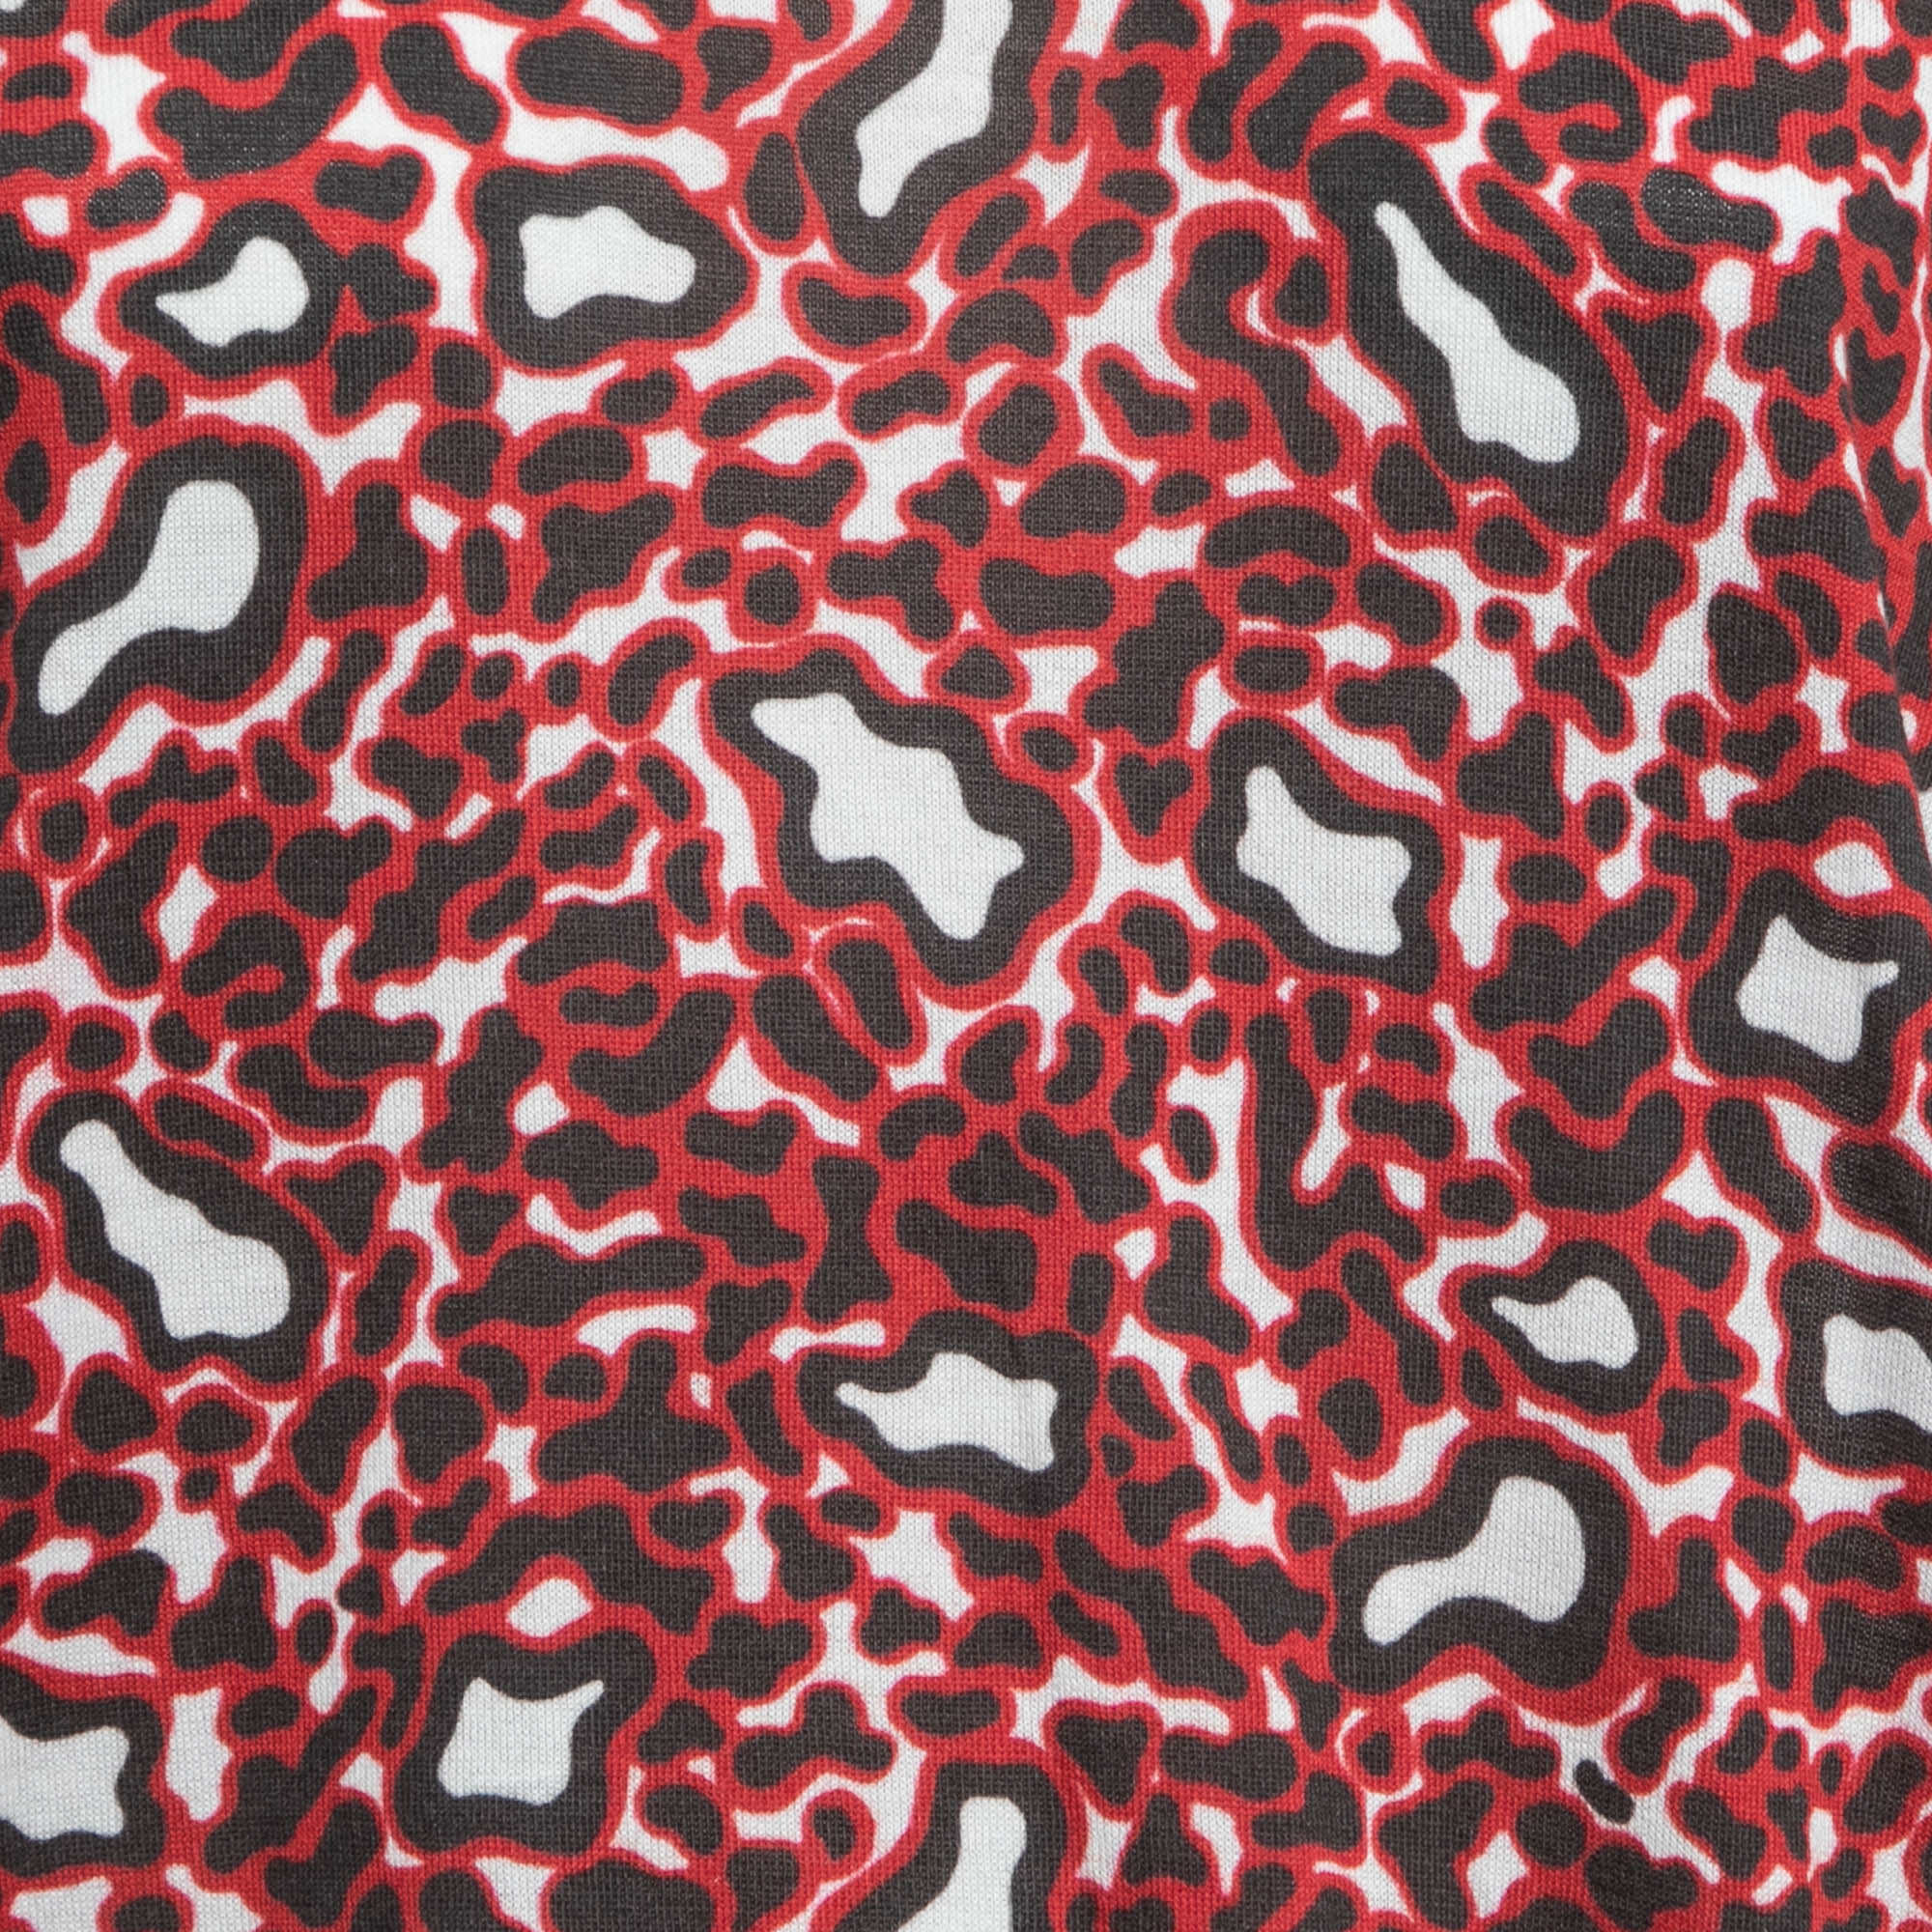 Stella McCartney Red Leopard Print Cotton Knit Long Sleeve Top M